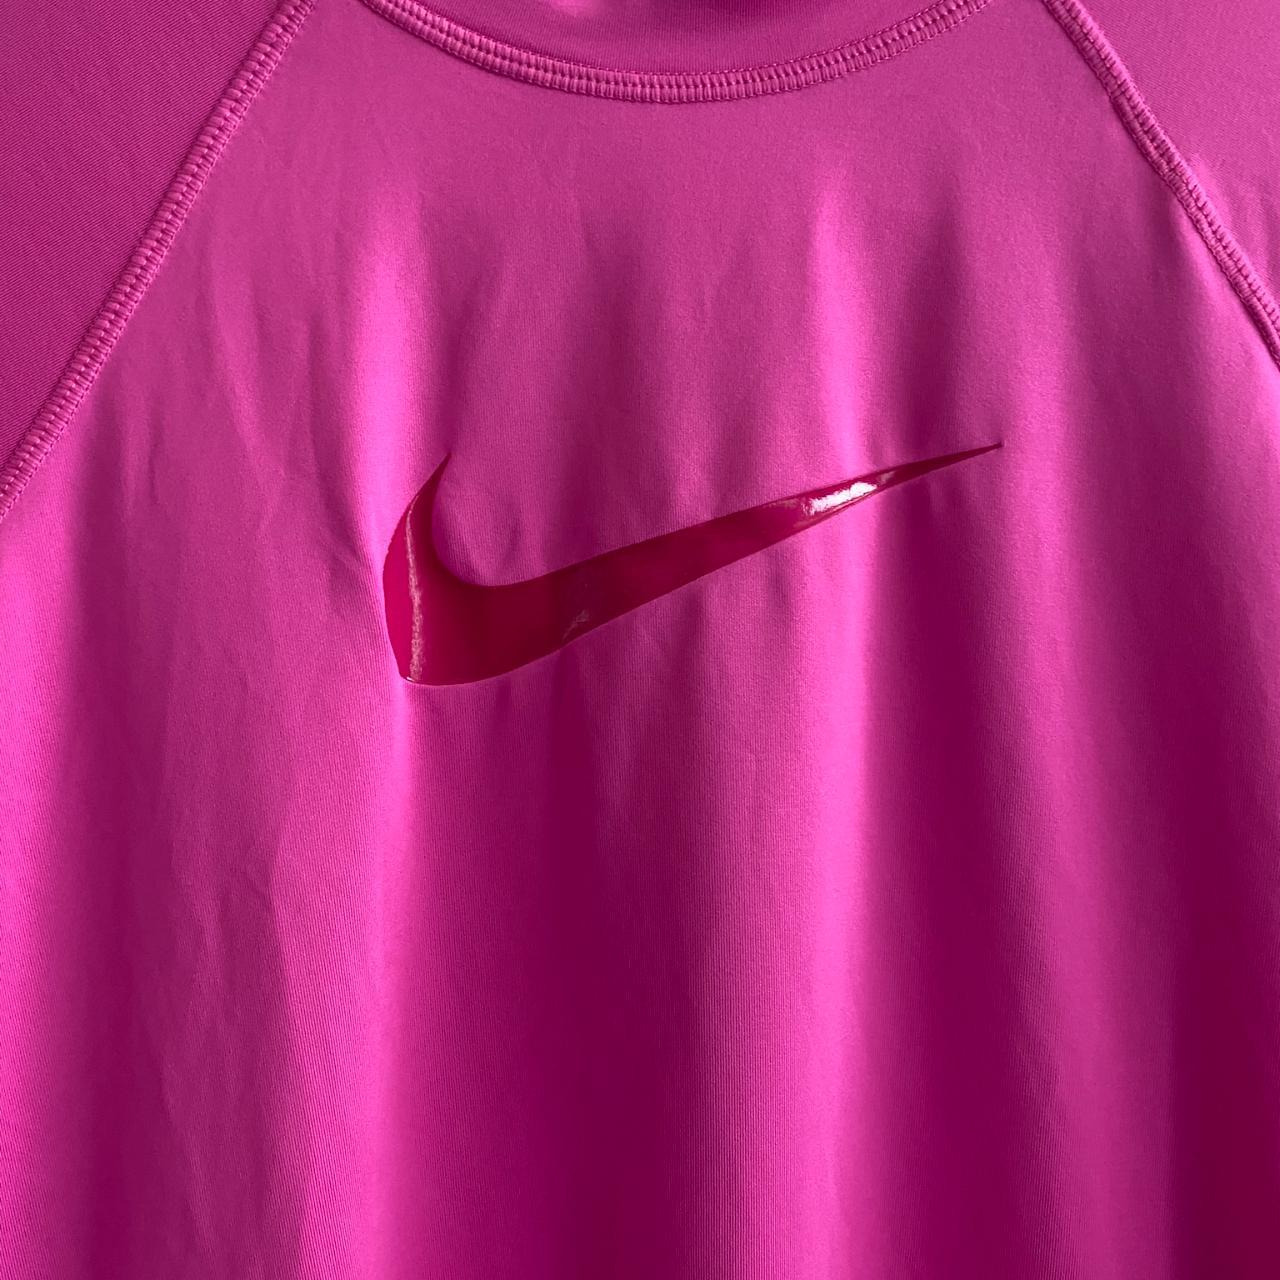 Nike Men's Pink Cover-ups (2)